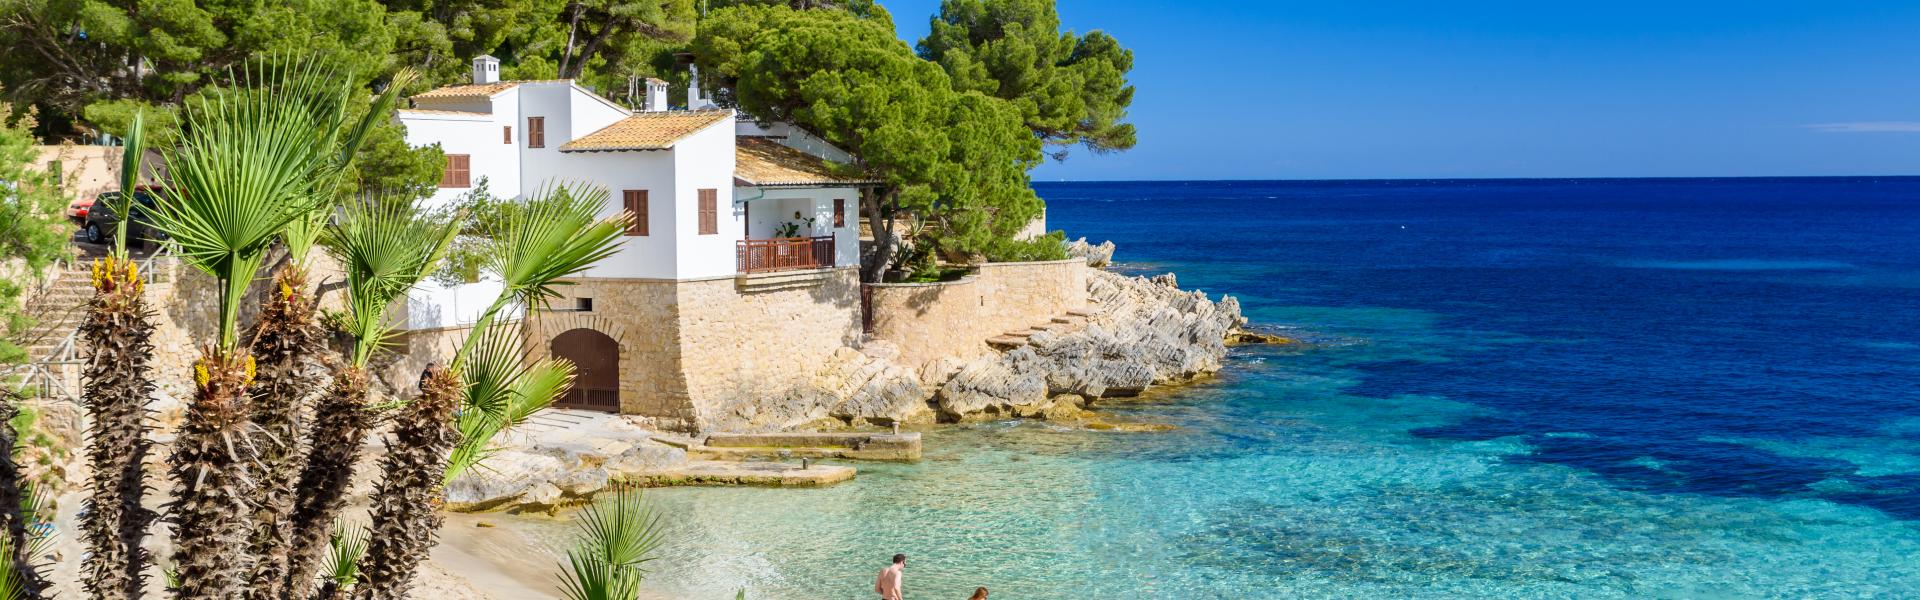 Locations et hébergements de vacances à Majorque - HomeToGo